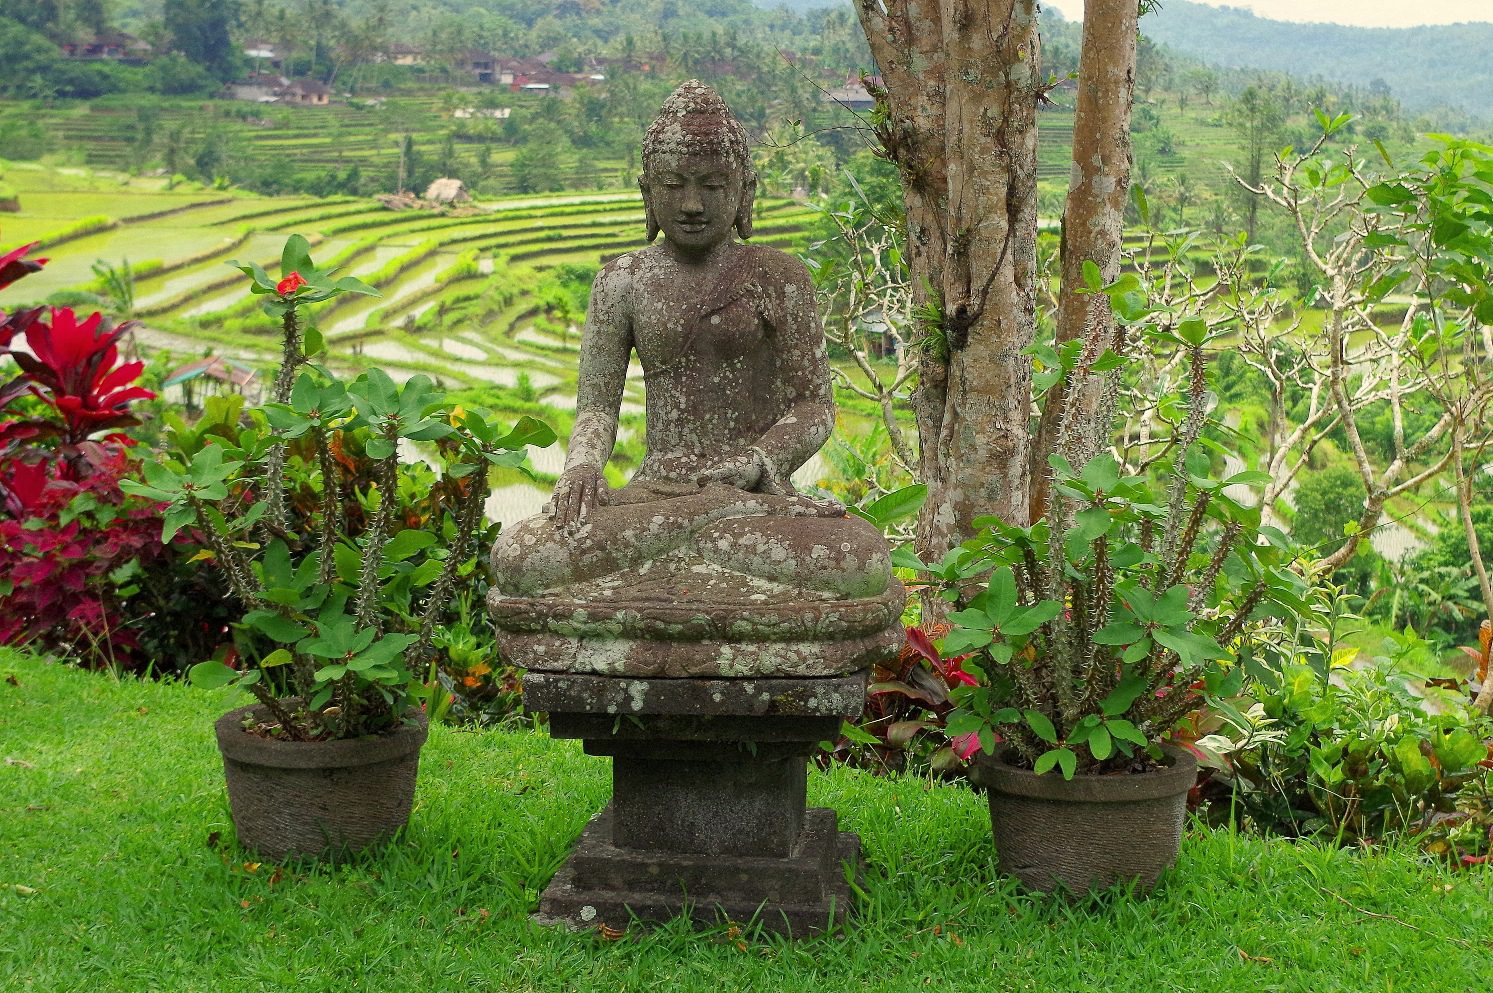 buddha peace